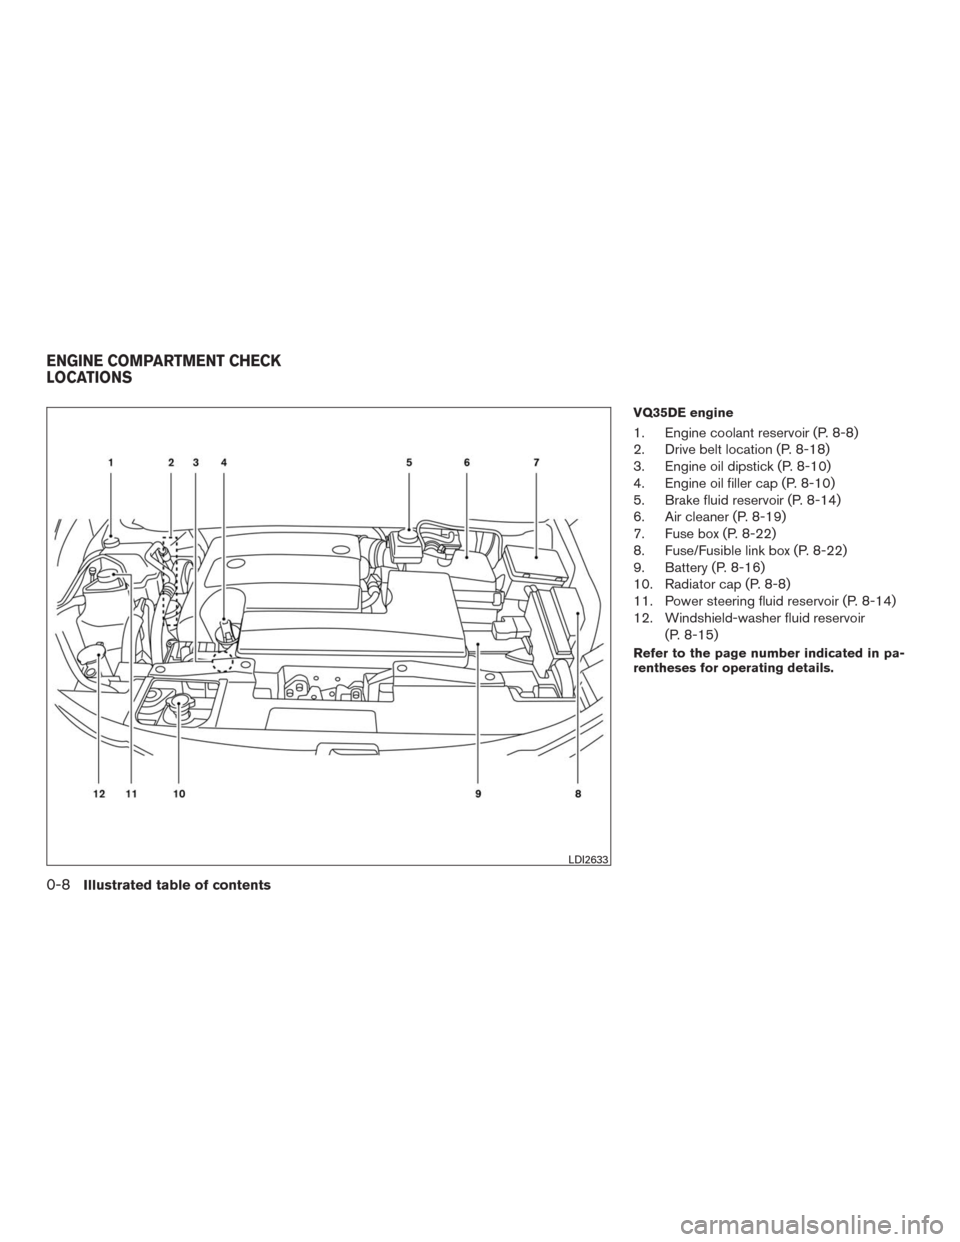 NISSAN MURANO 2016 3.G User Guide VQ35DE engine
1. Engine coolant reservoir (P. 8-8)
2. Drive belt location (P. 8-18)
3. Engine oil dipstick (P. 8-10)
4. Engine oil filler cap (P. 8-10)
5. Brake fluid reservoir (P. 8-14)
6. Air cleane